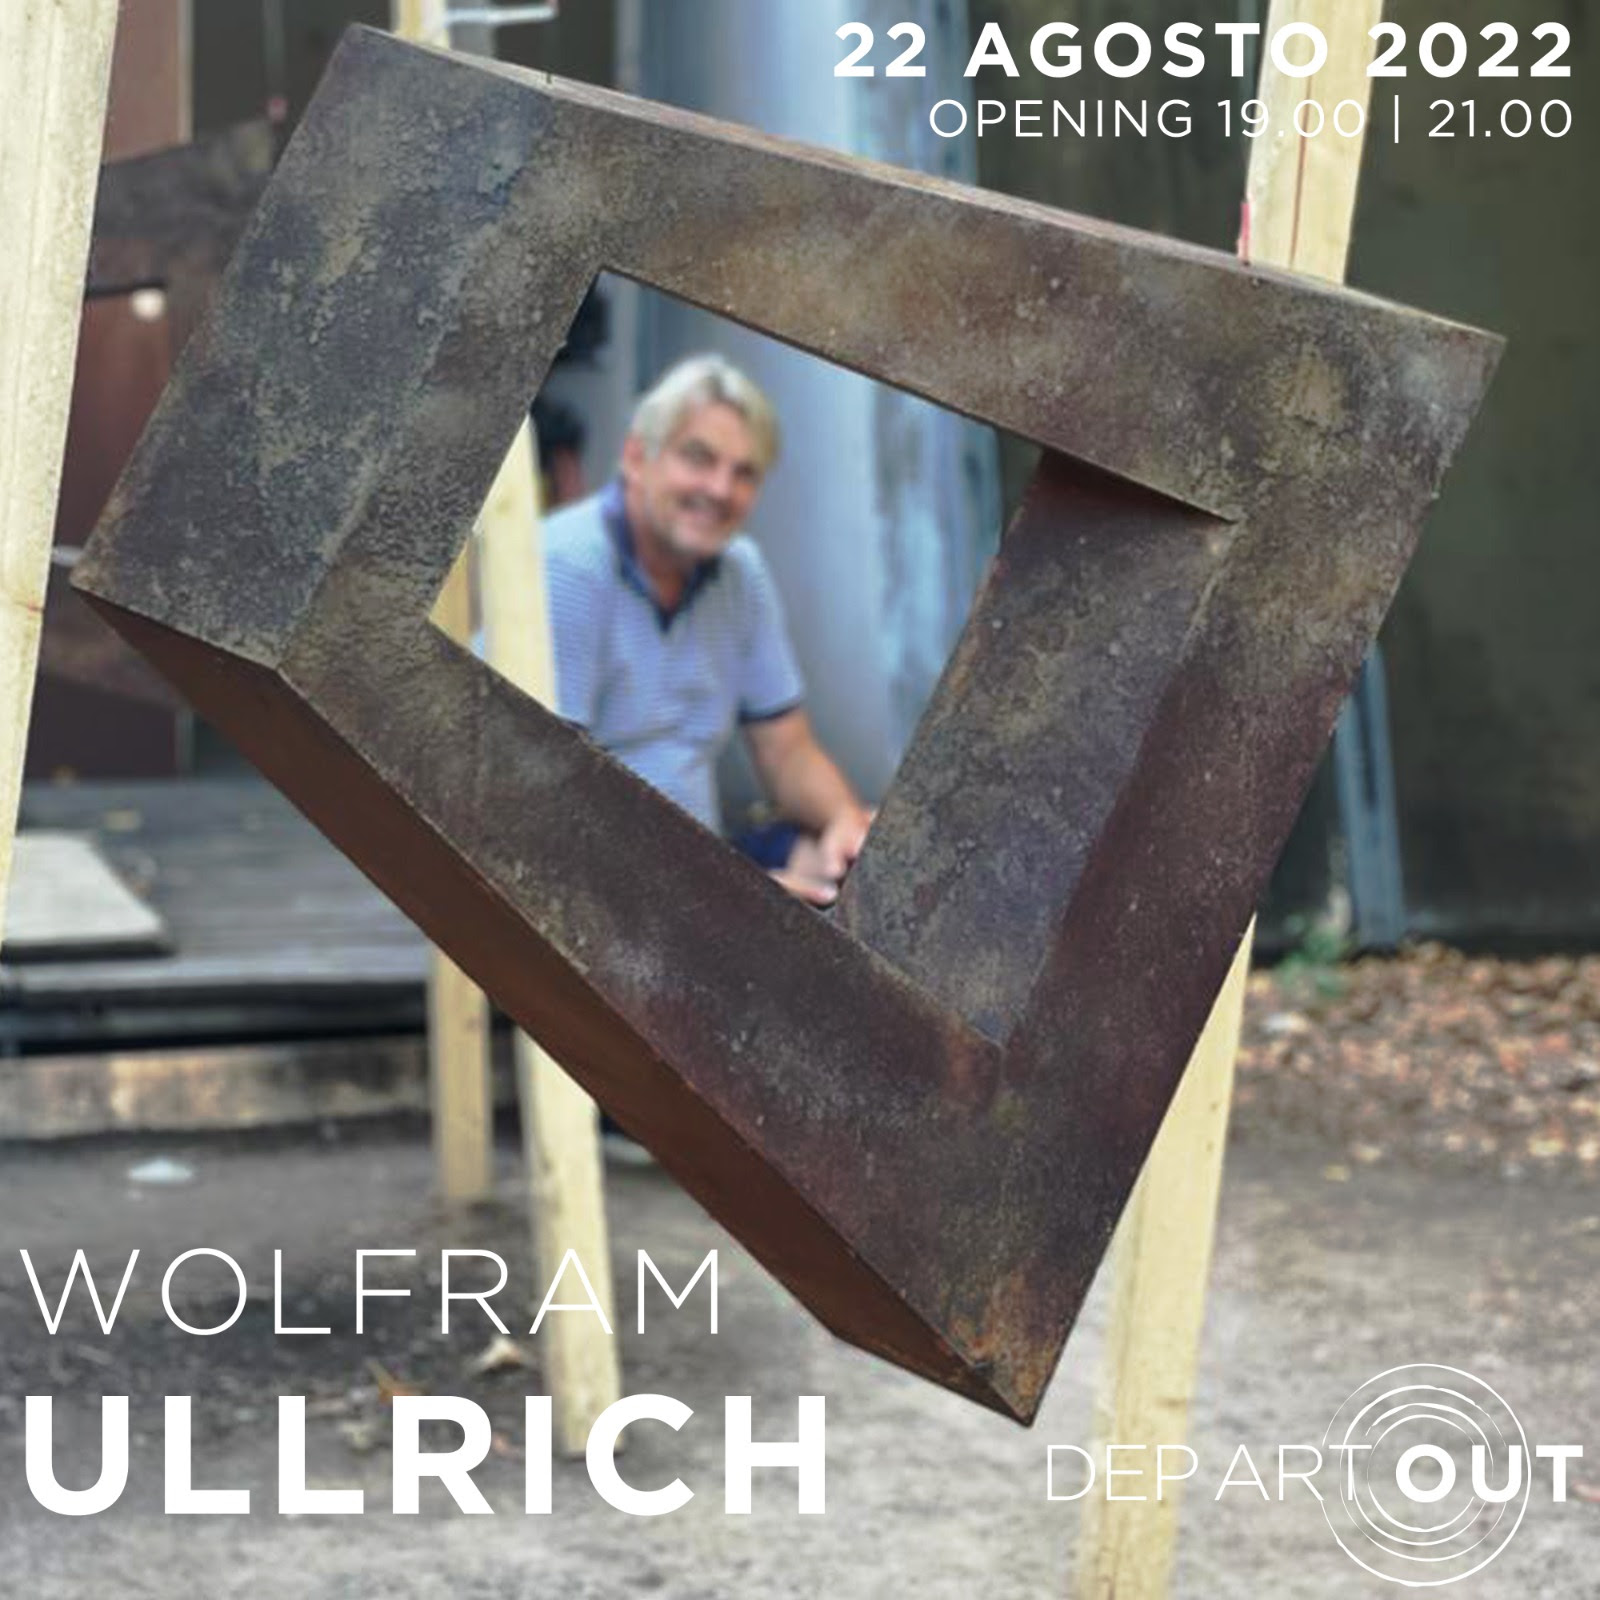 Wolfram Ullrich